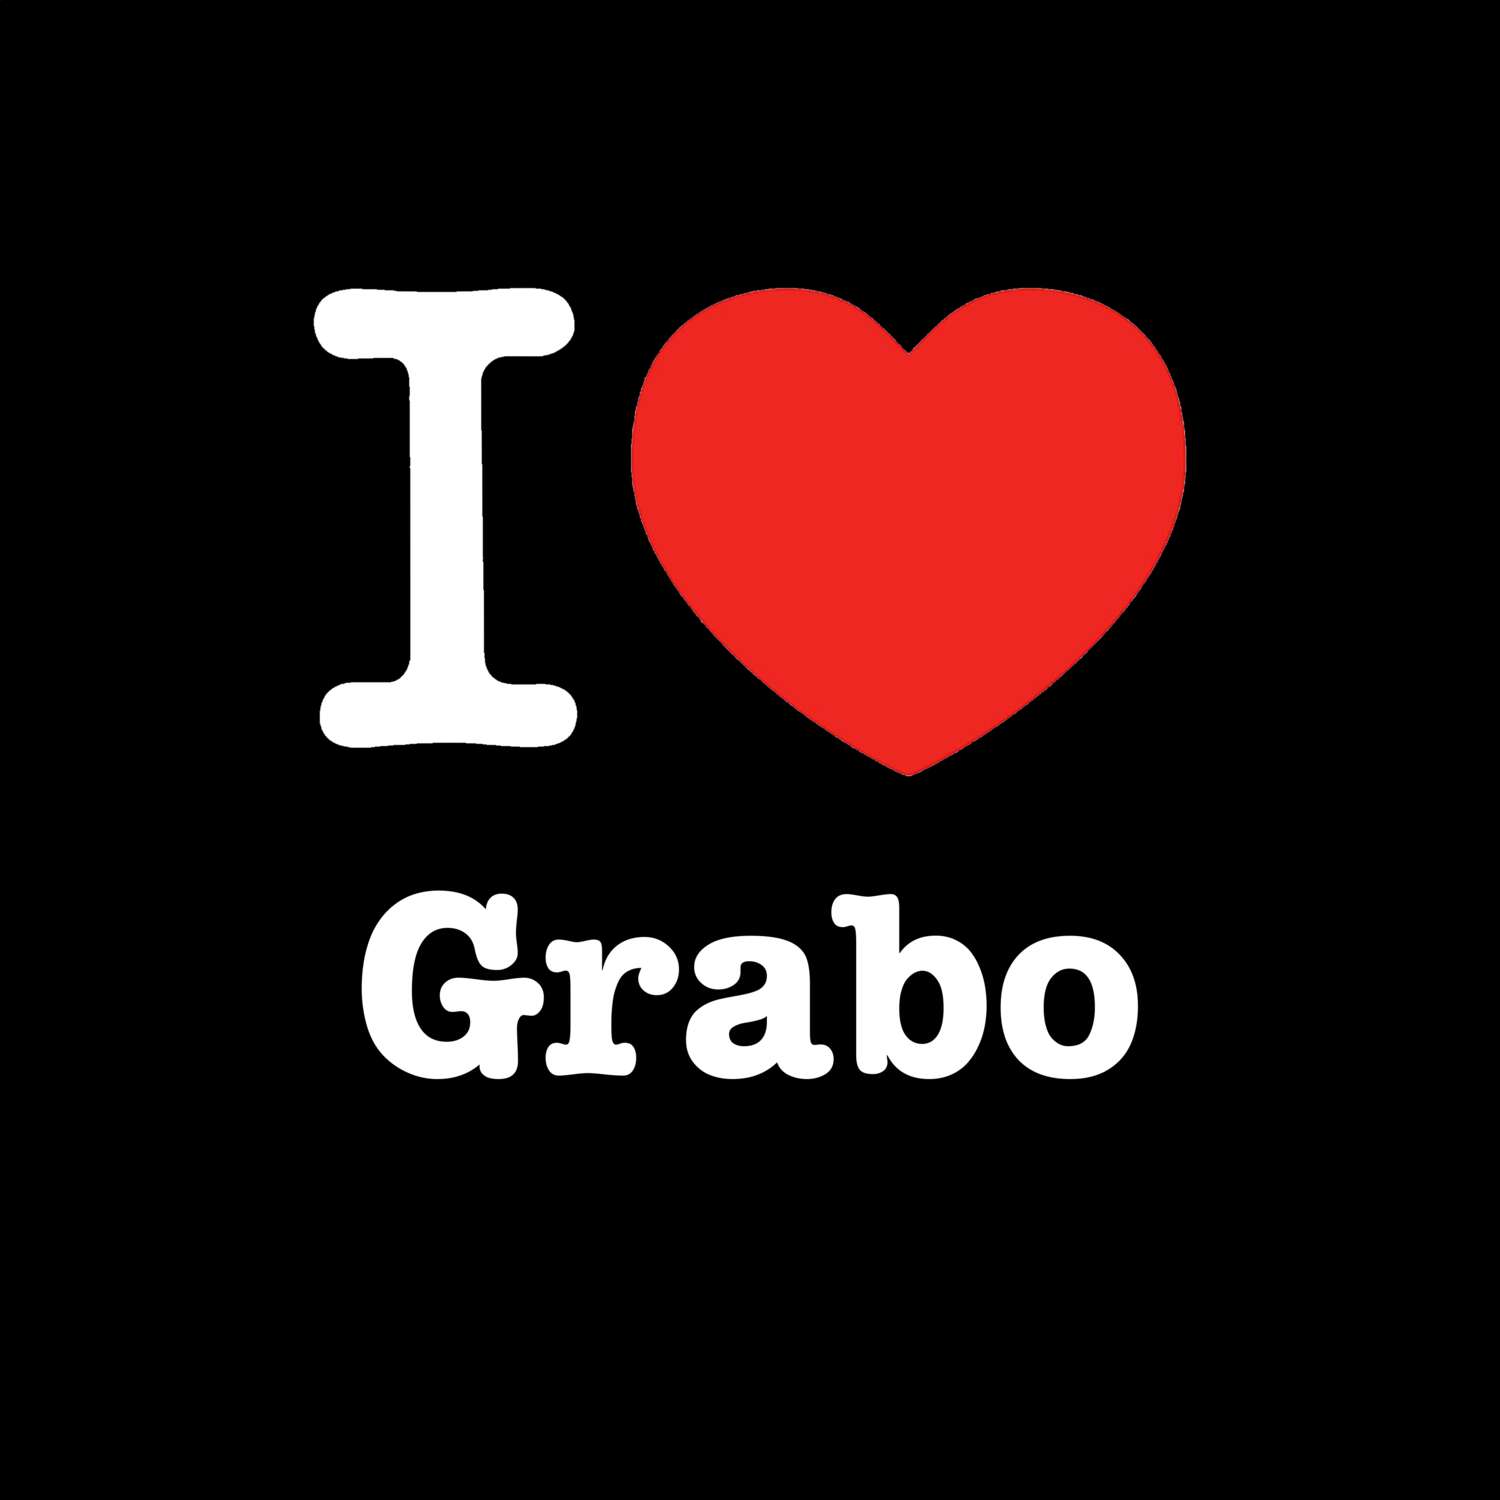 Grabo T-Shirt »I love«